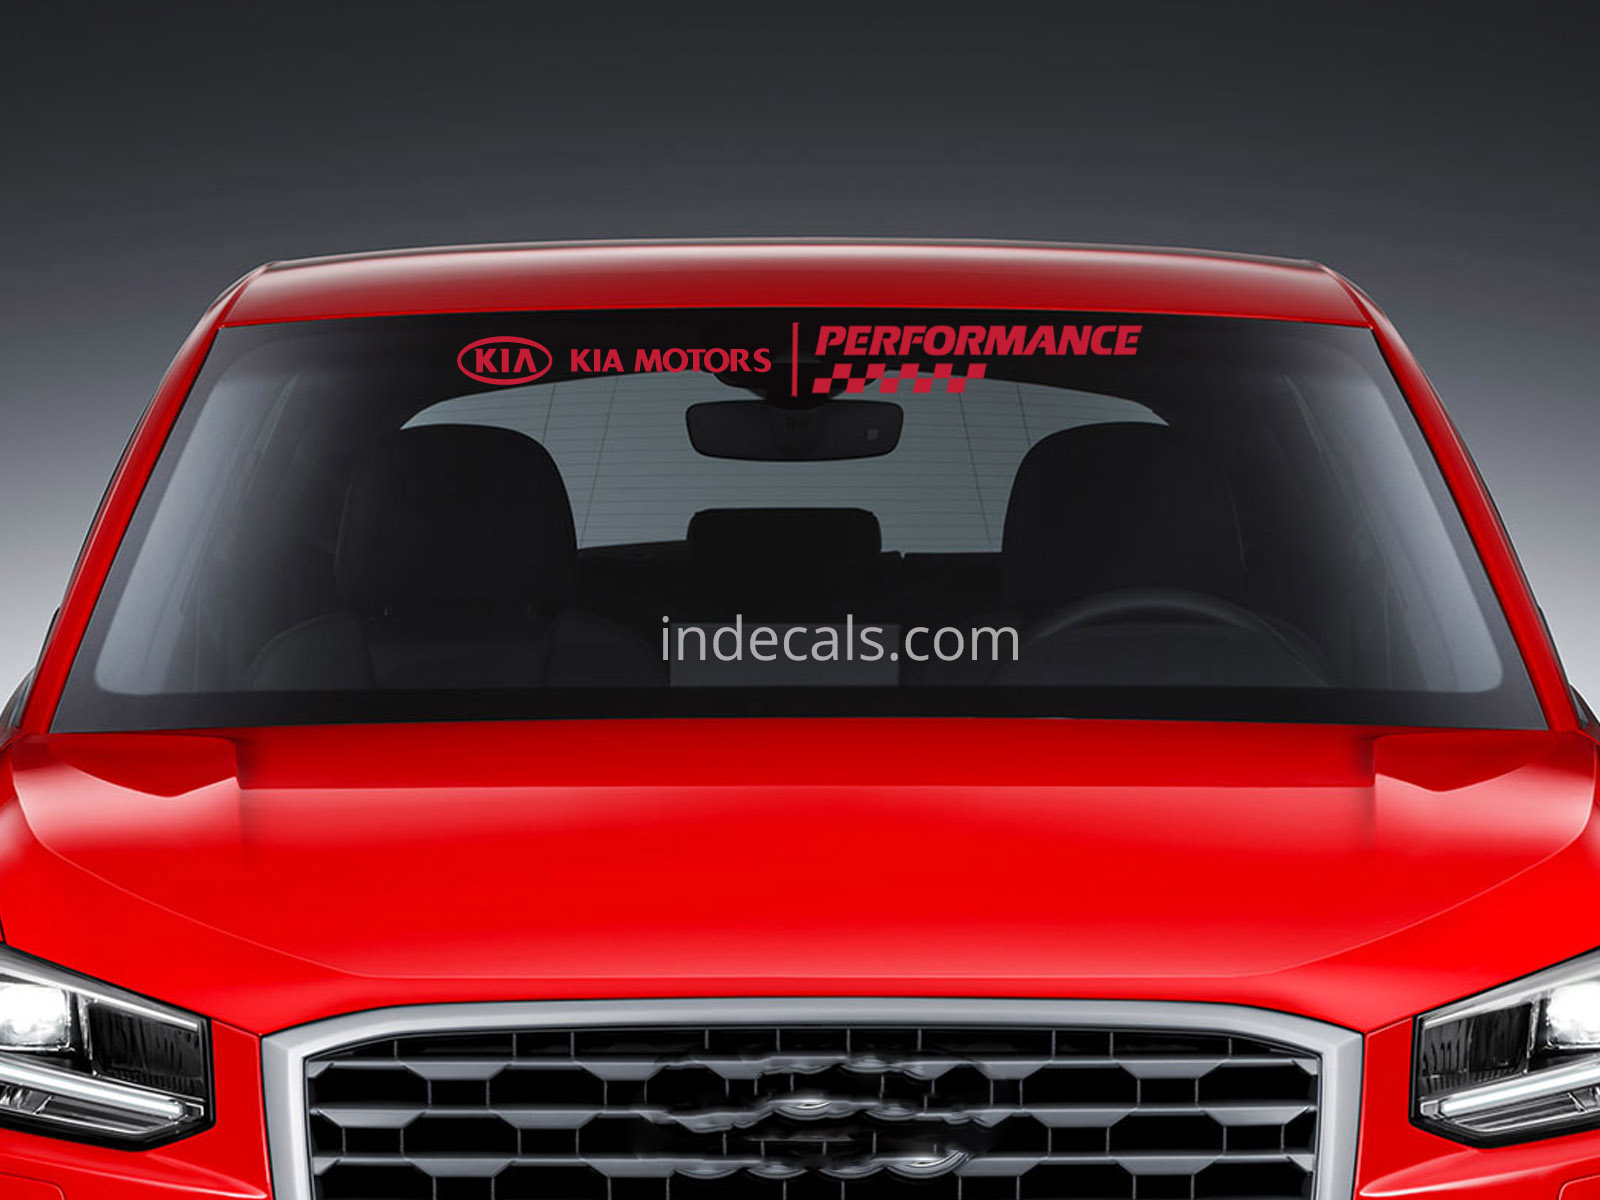 1 x Kia Performance Sticker for Windshield or Back Window - Red